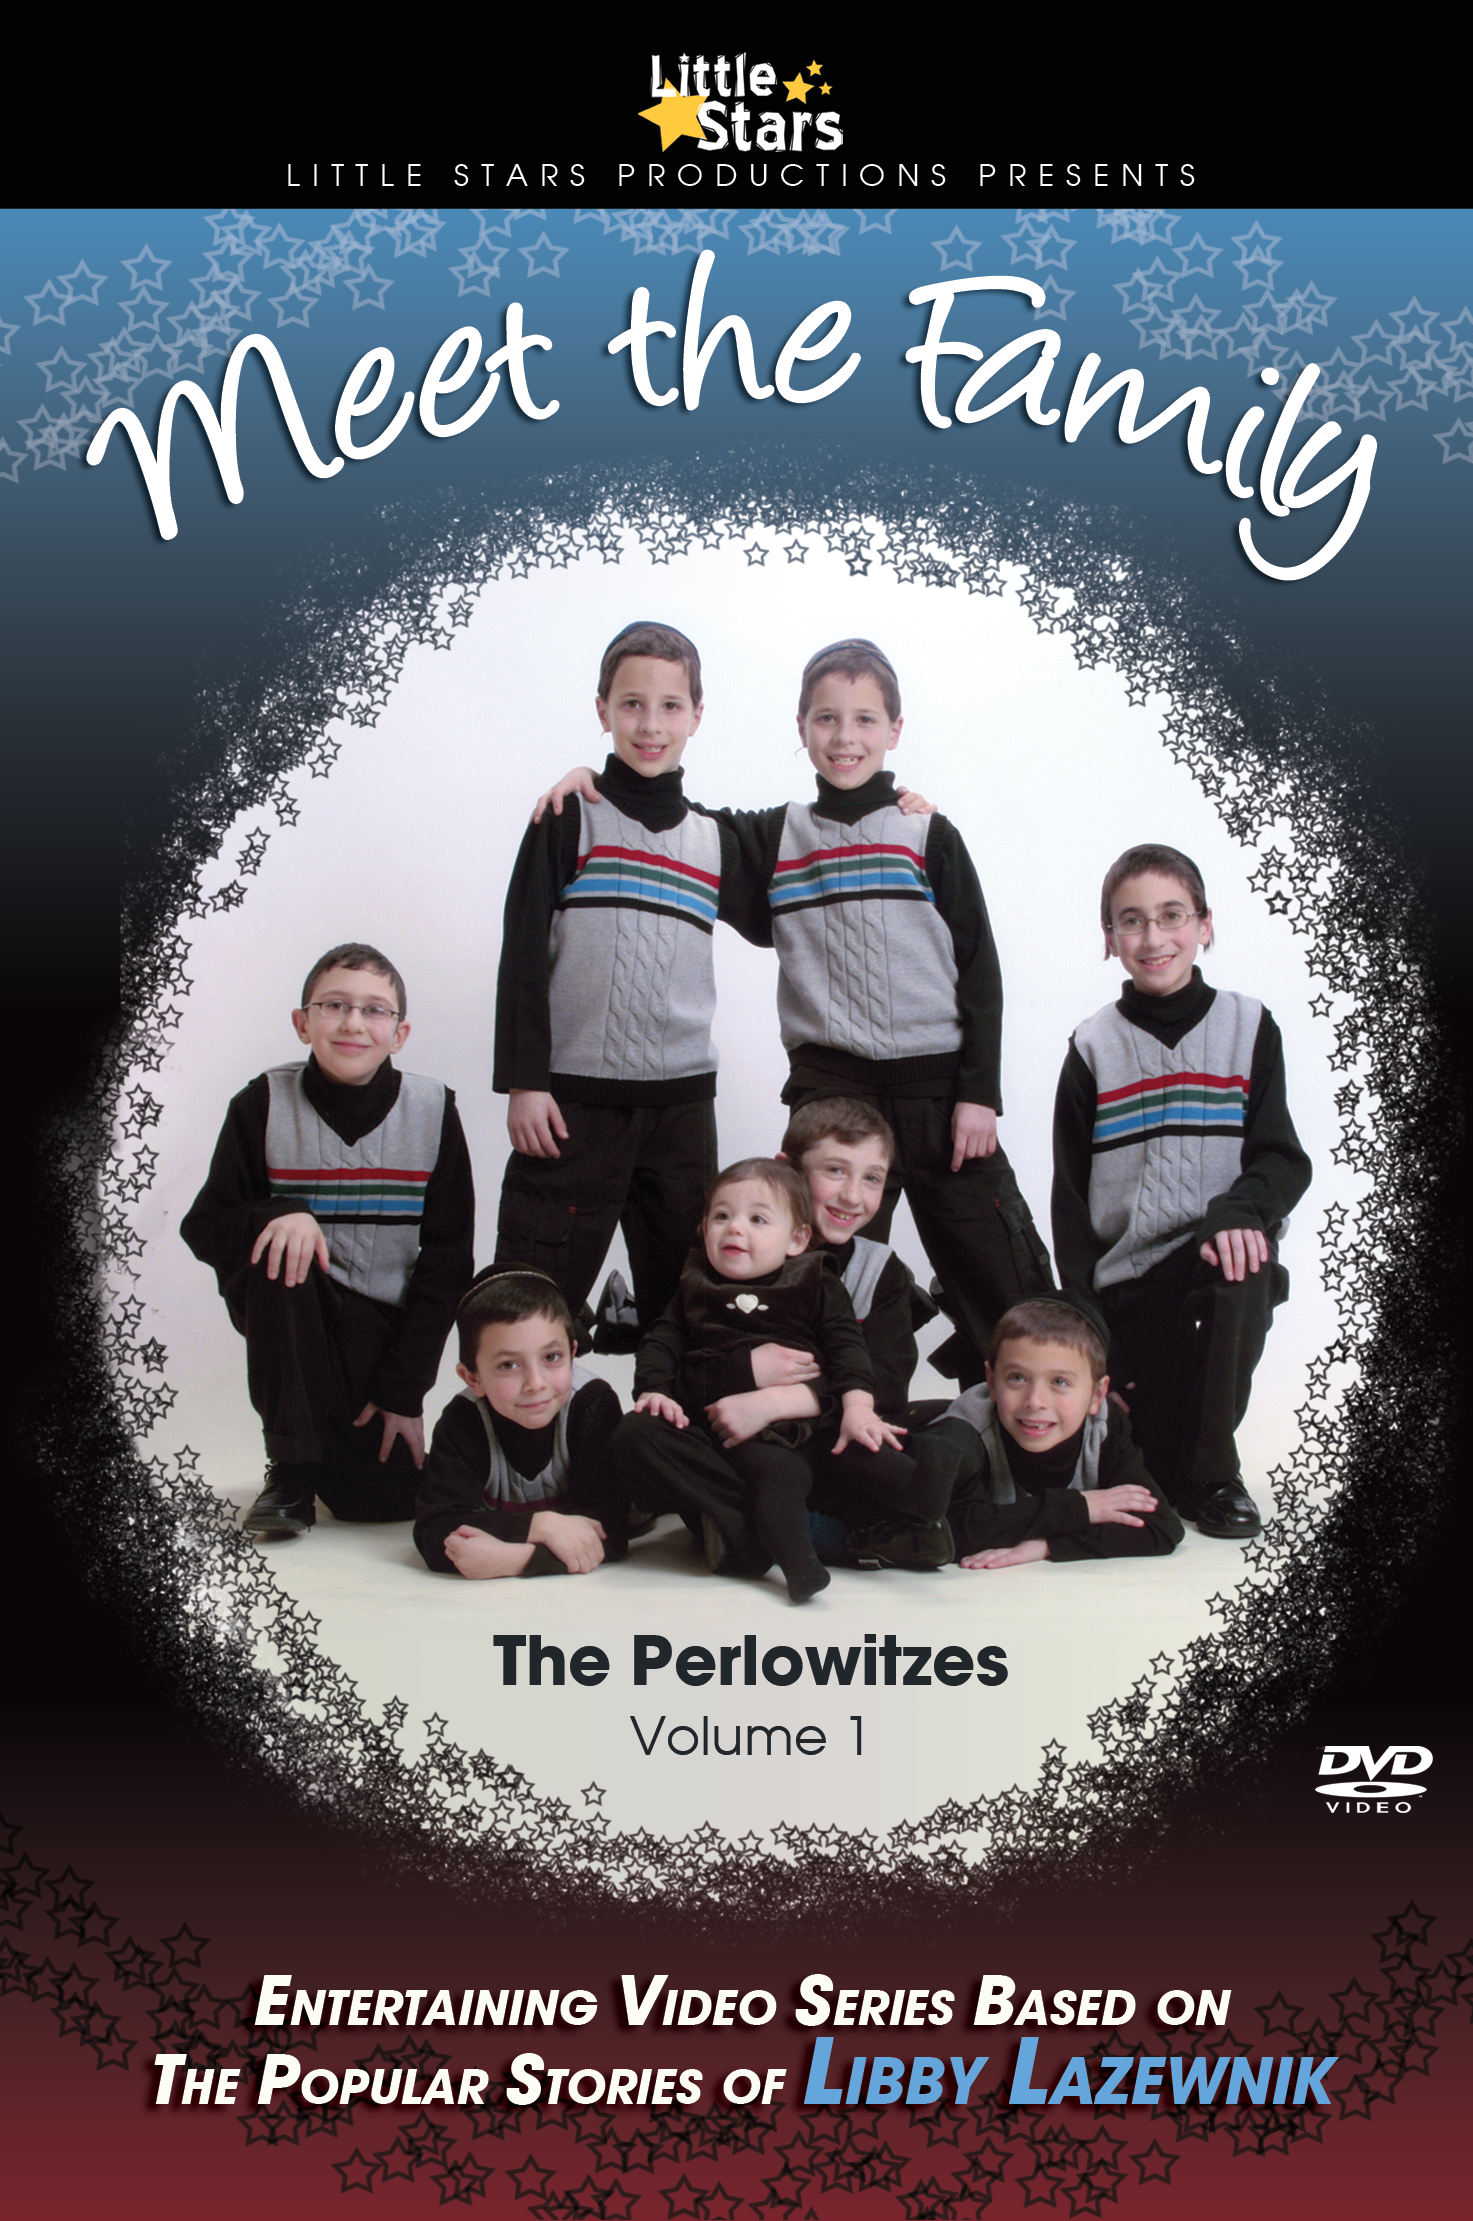 The Perlowitzes - Meet The Family (Video)